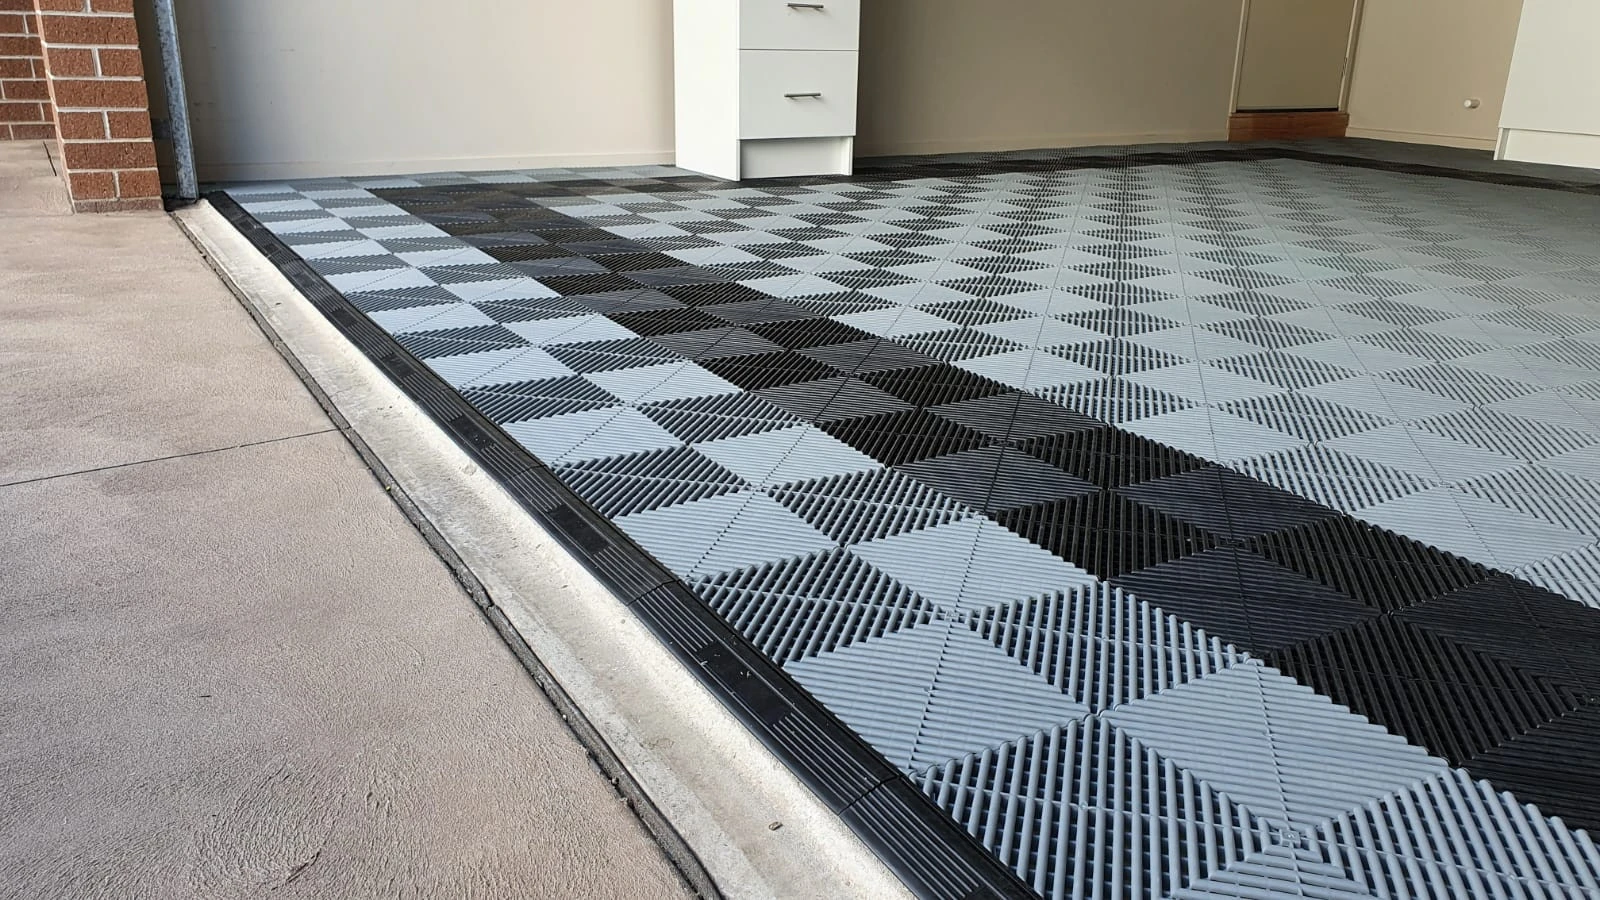 2020Hot selling Strength car garage floor grate plastic modular interlocking tiles PVC garage floor tiles